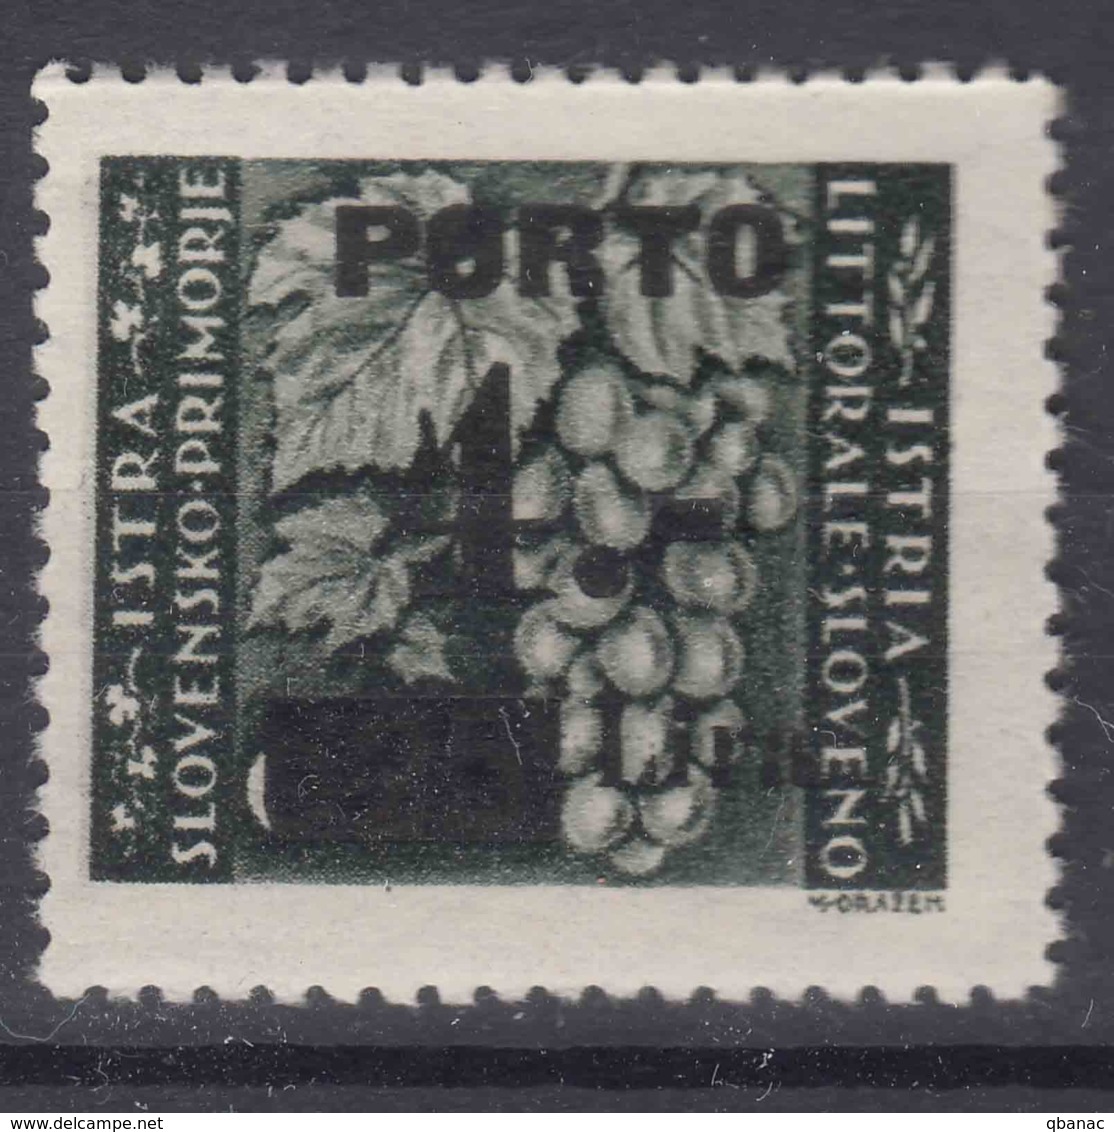 Istria Litorale Yugoslavia Occupation, Porto 1946 Sassone#16 Overprint I, Mint Hinged - Yugoslavian Occ.: Istria